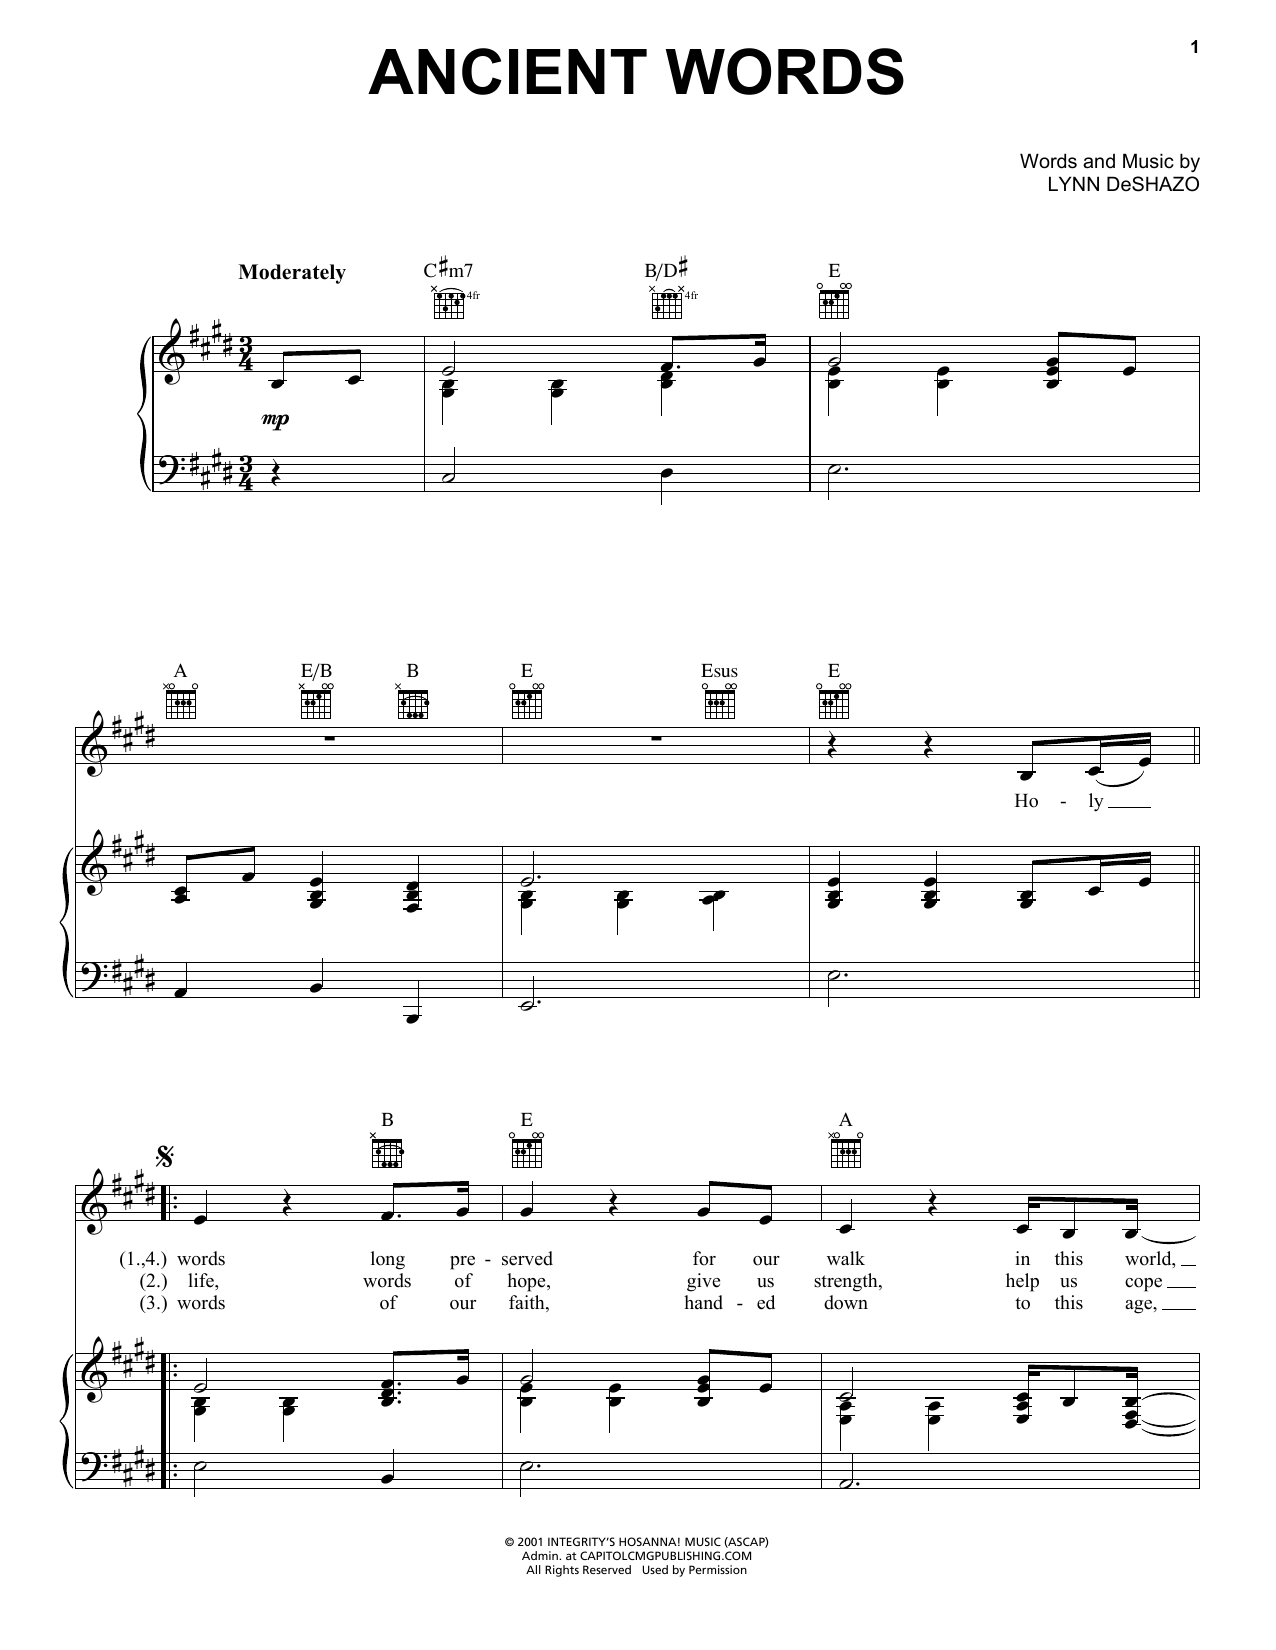 Lynn DeShazo Ancient Words Sheet Music Notes & Chords for Alto Sax Solo - Download or Print PDF